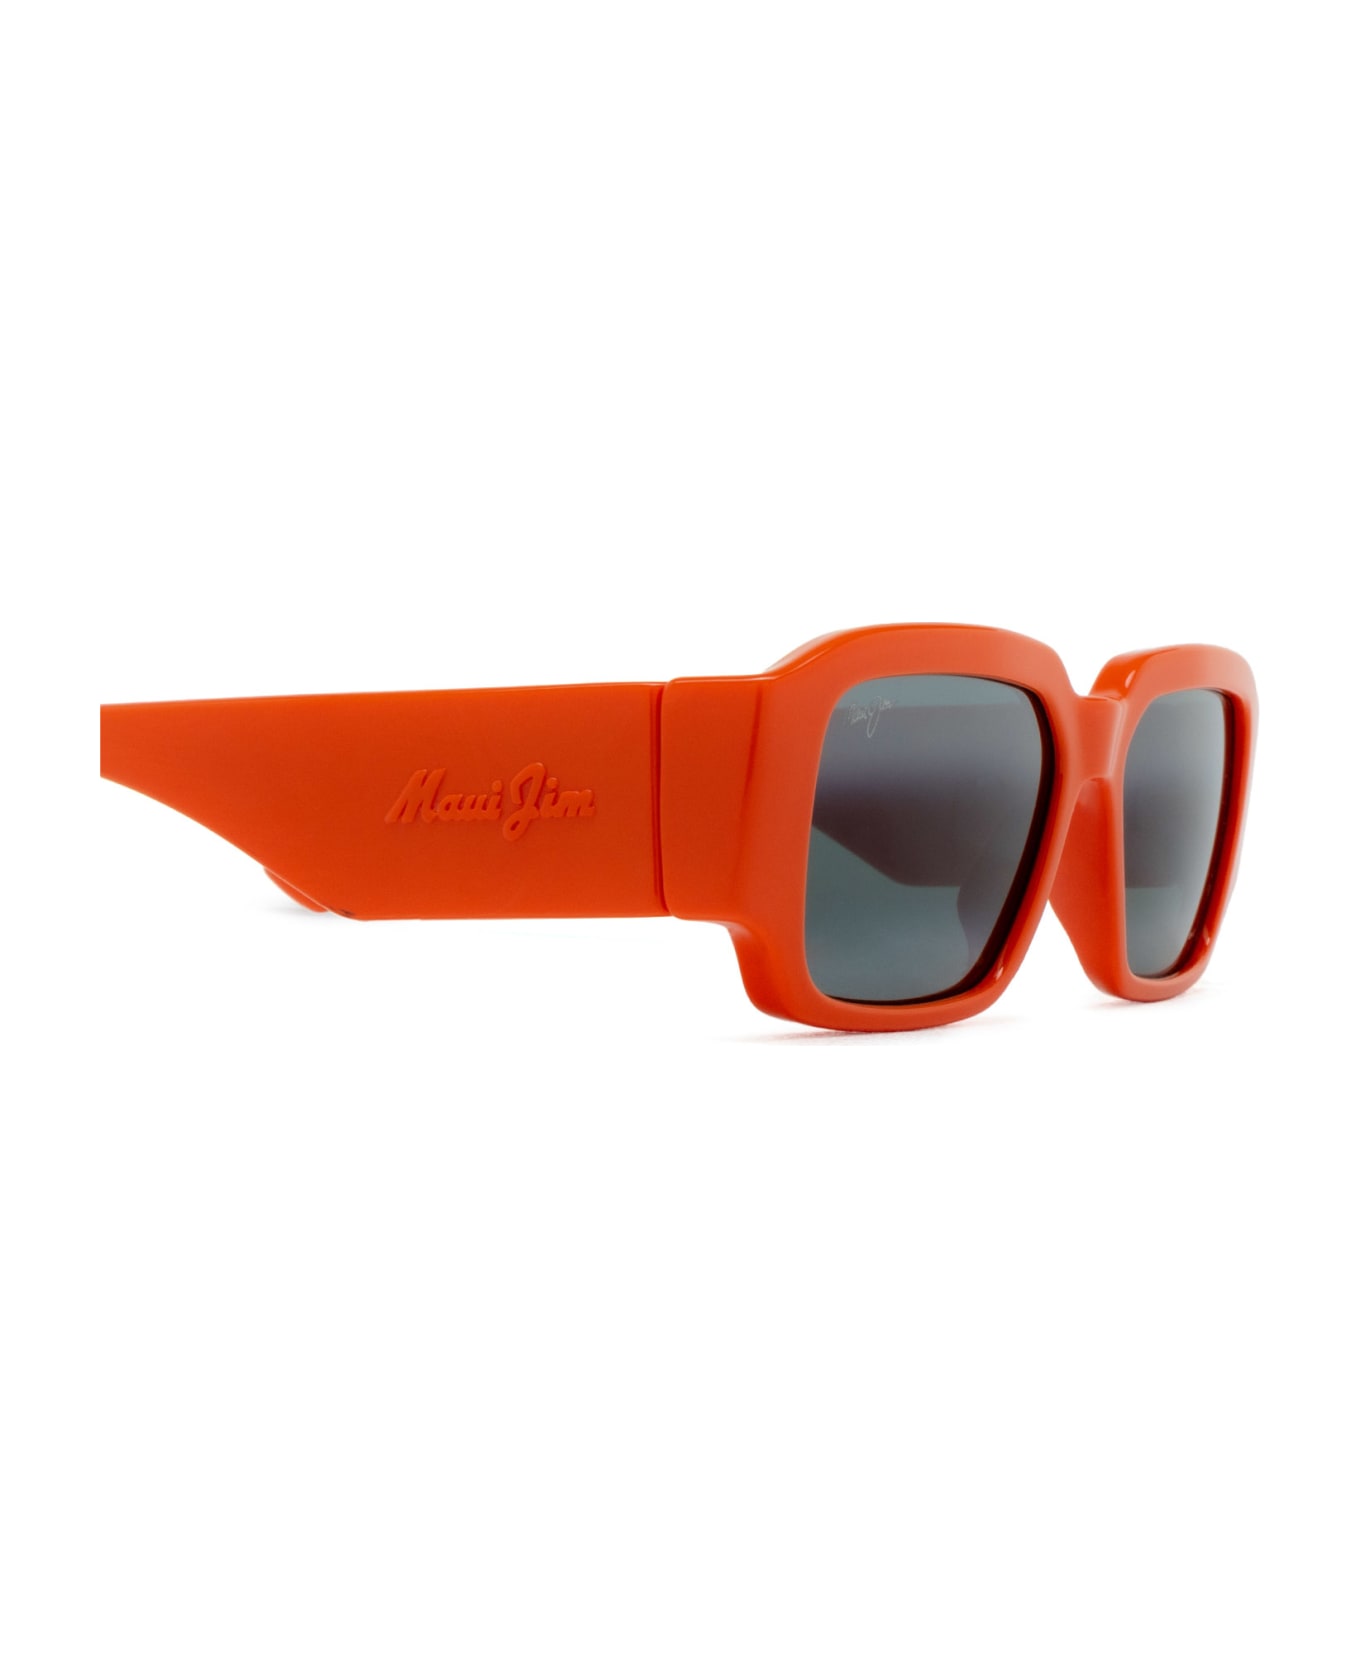 Maui Jim Mj639 Shiny Orange Sunglasses - Shiny Orange サングラス